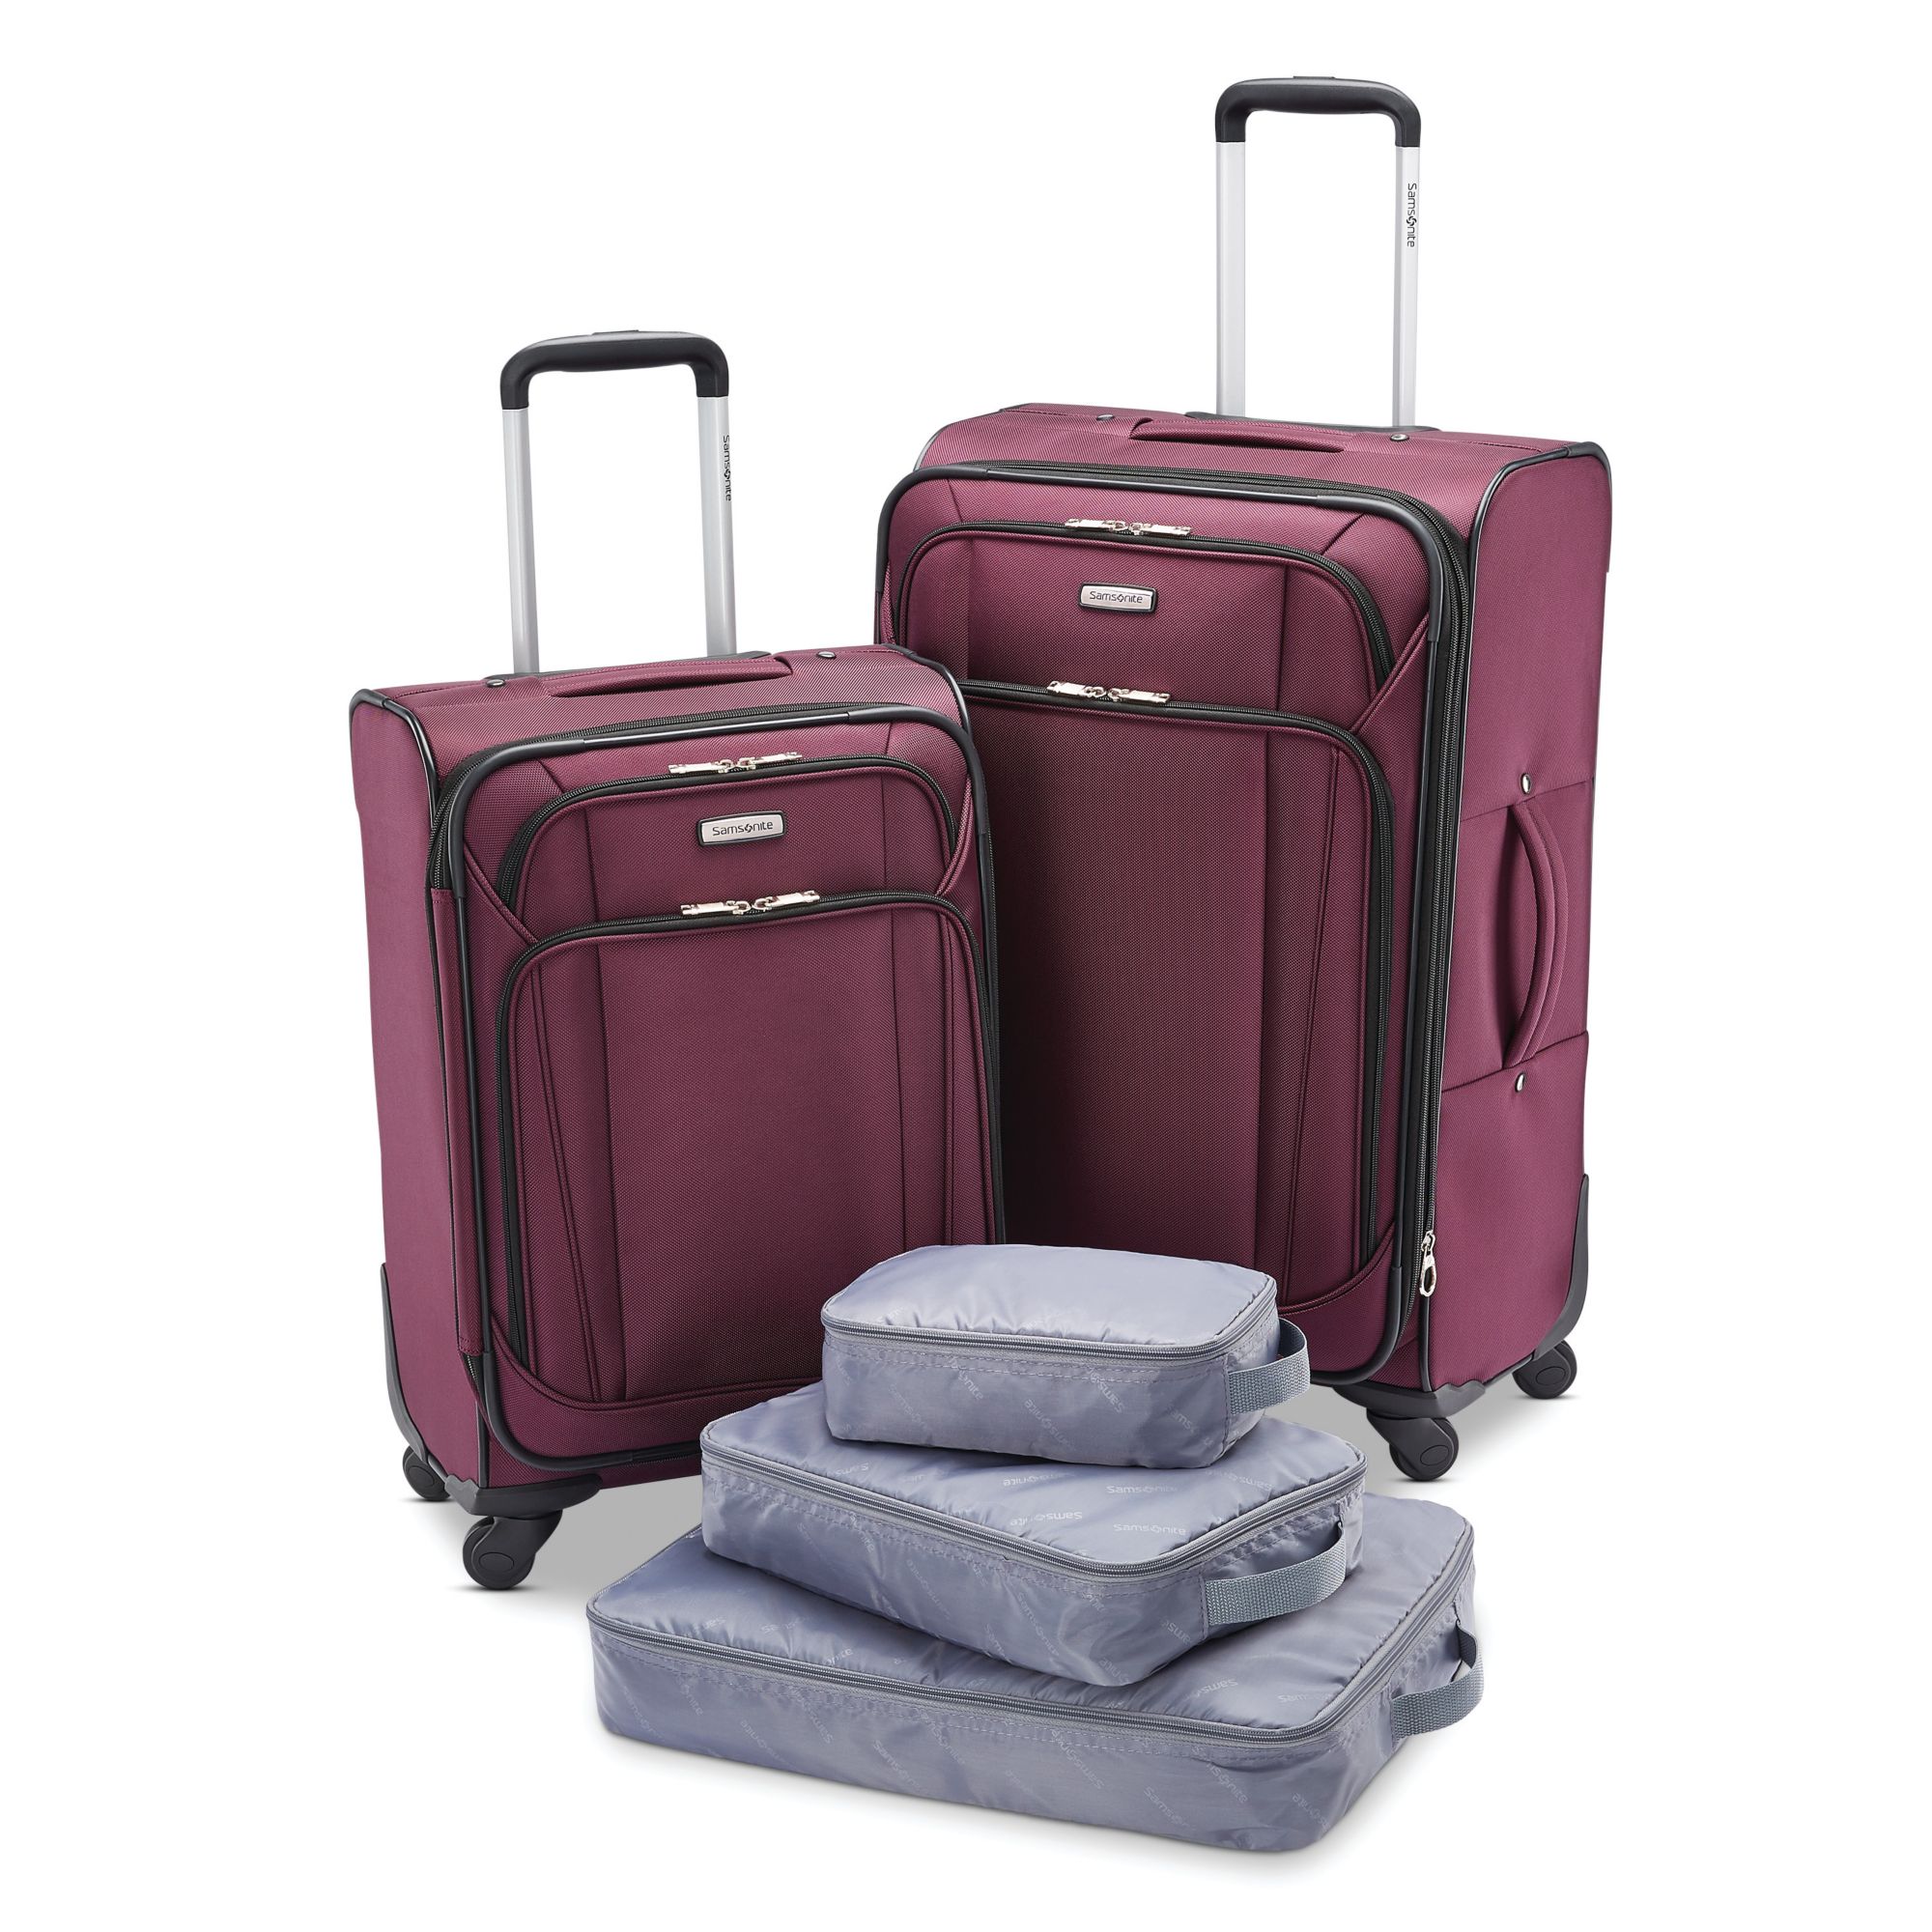 Samsonite & Brighton Luggage with Travel Accessories (B3-HS